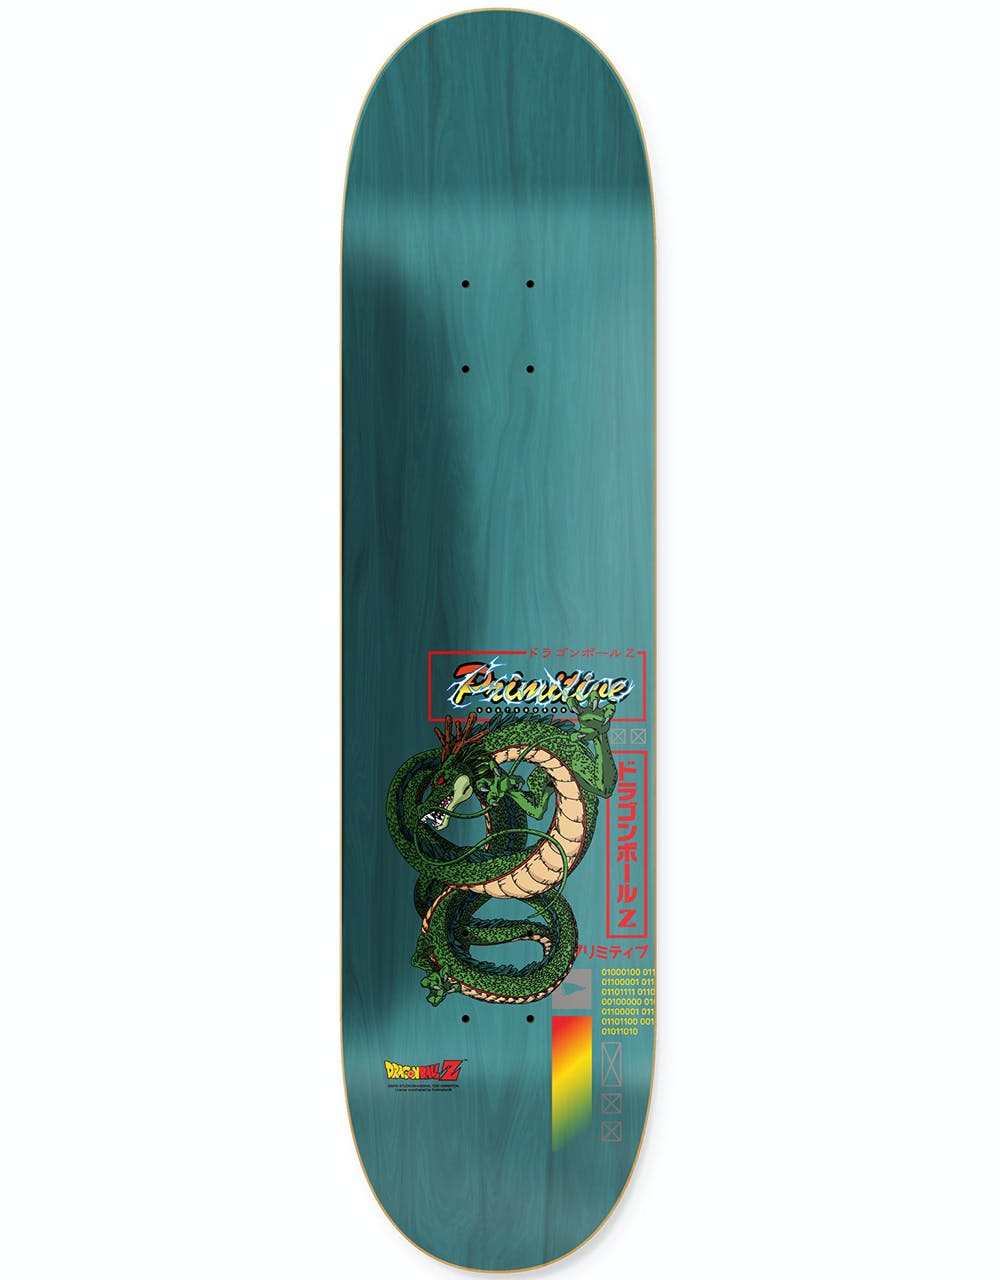 Primitive x Dragon Ball Z Peacock Gohan Skateboard Deck - 8.25"